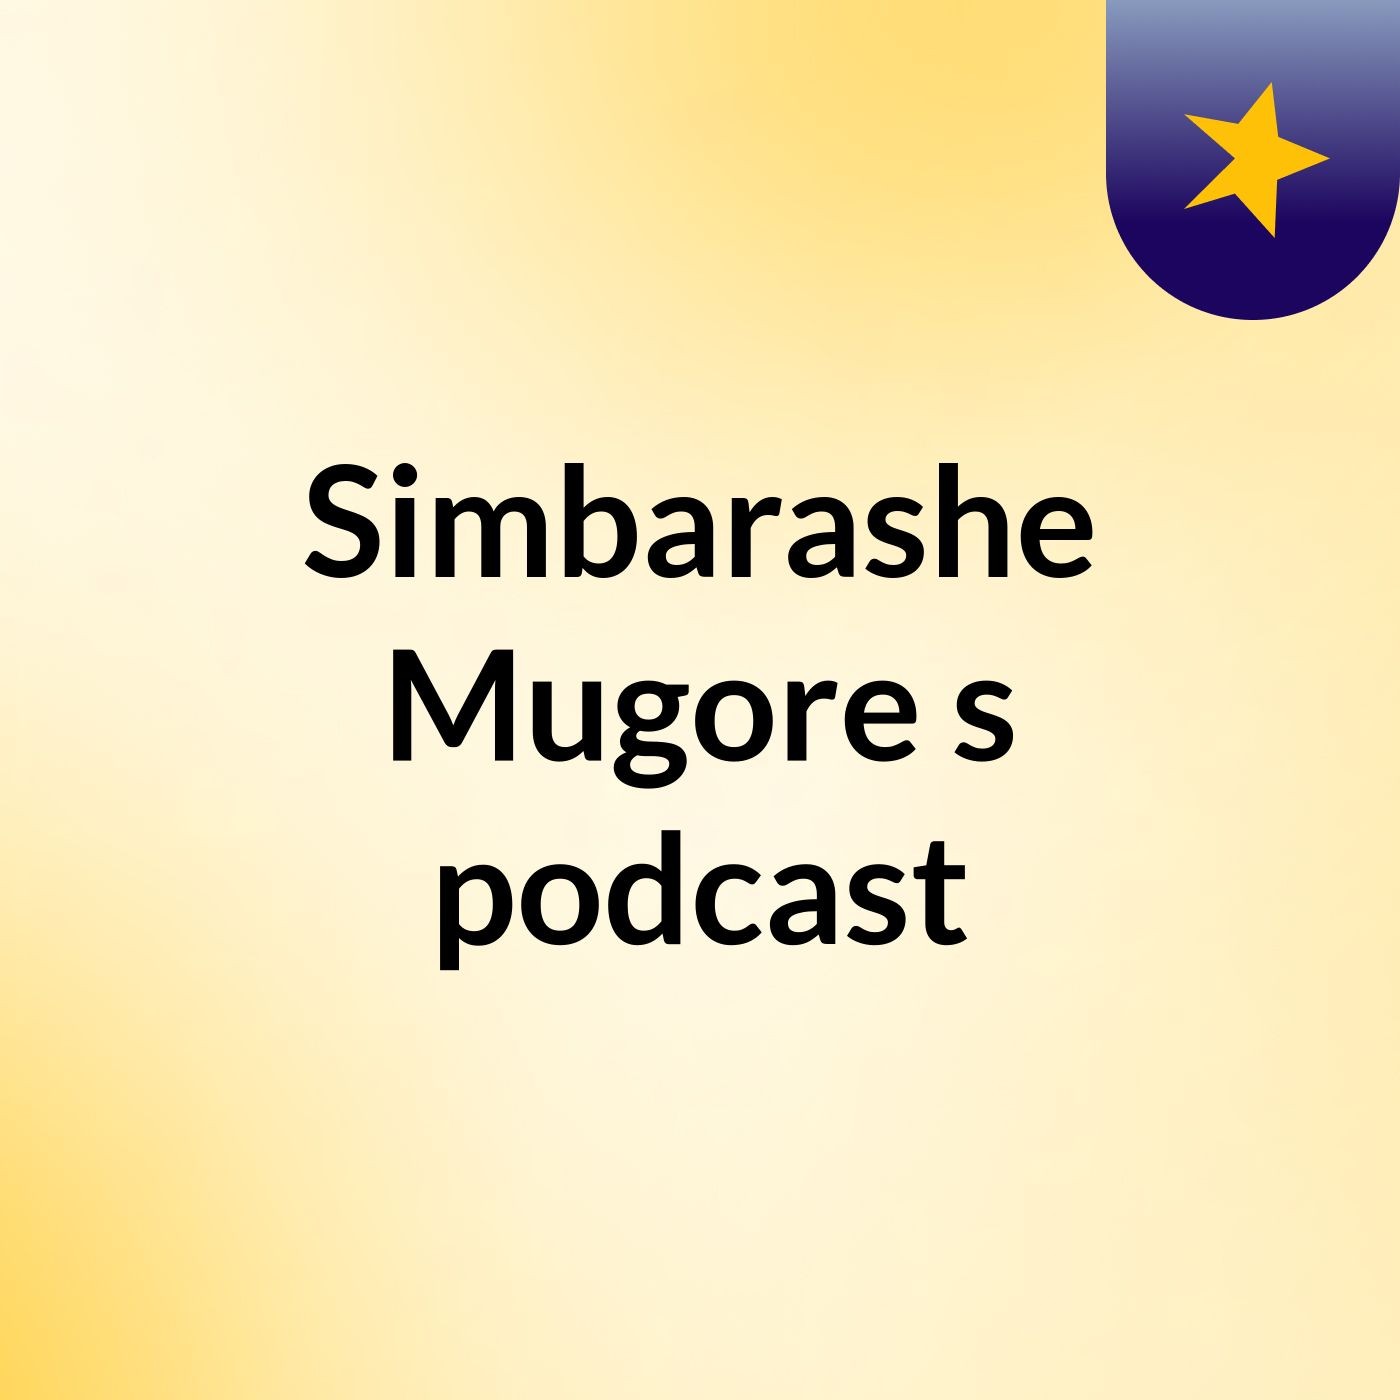 Simbarashe Mugore's podcast